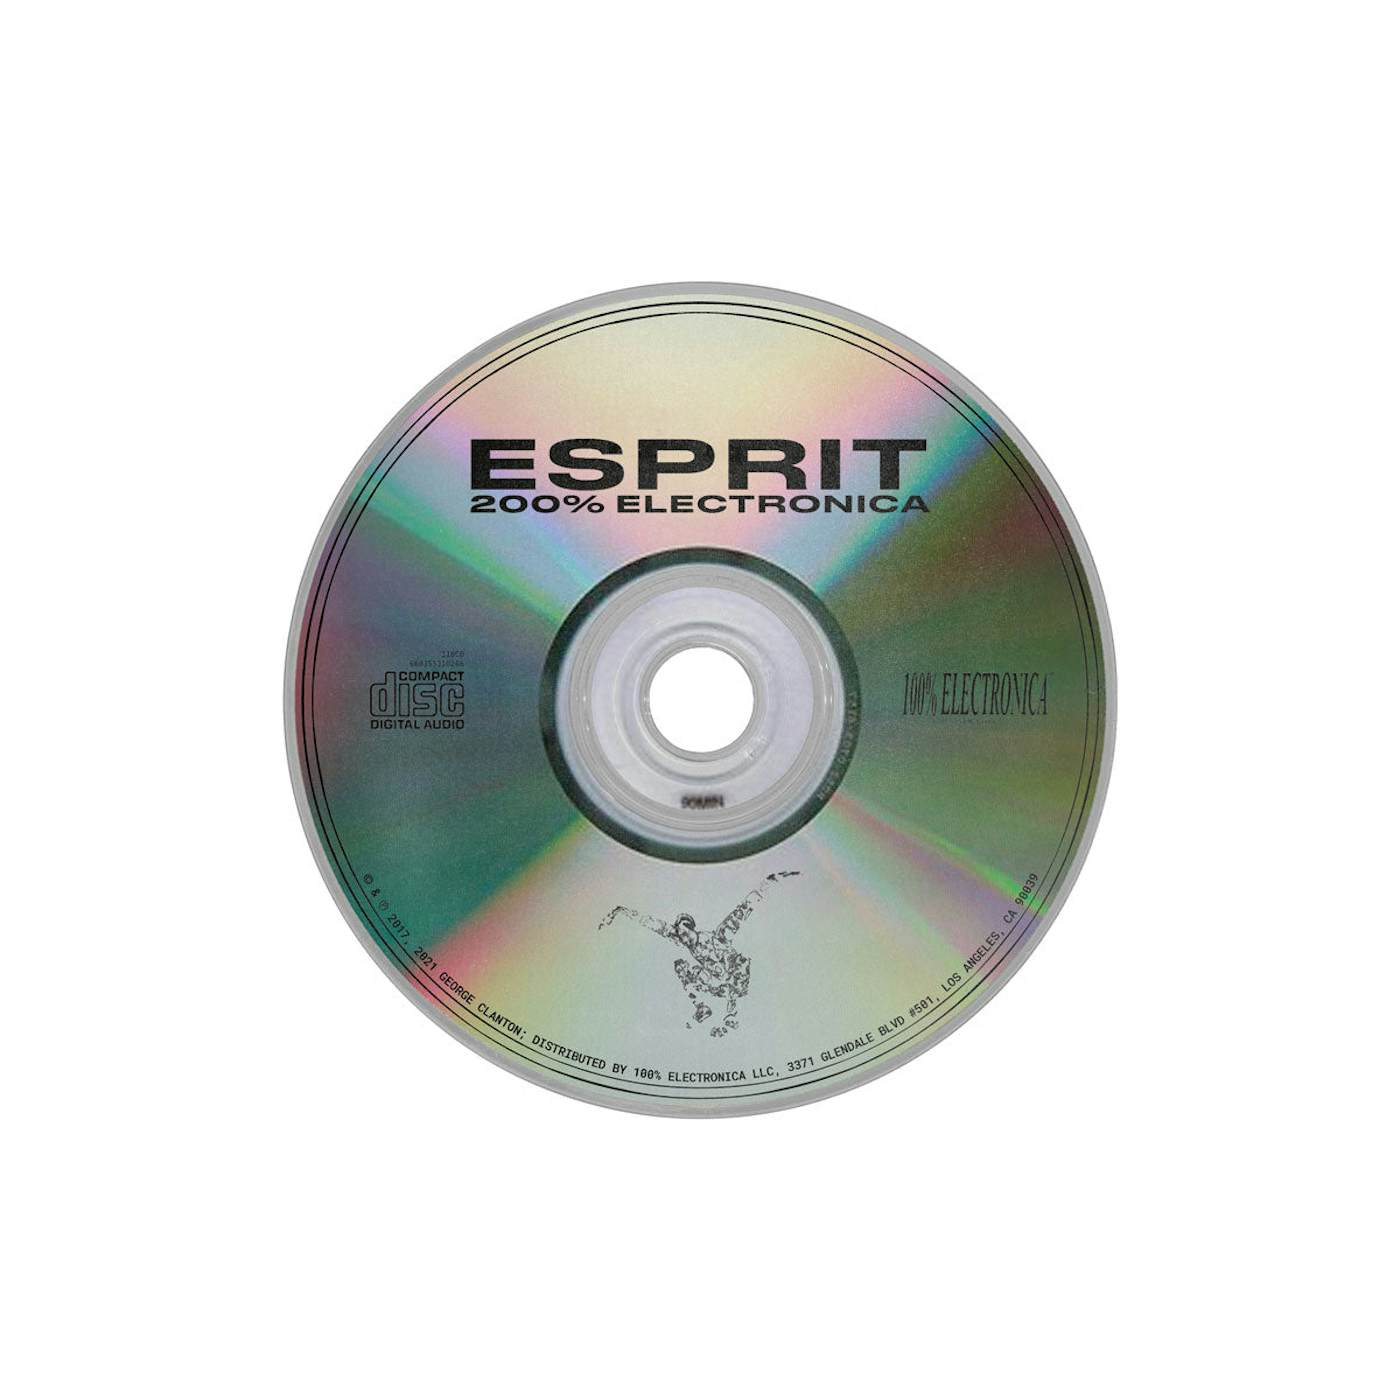 ESPRIT 空想 200% Electronica CD